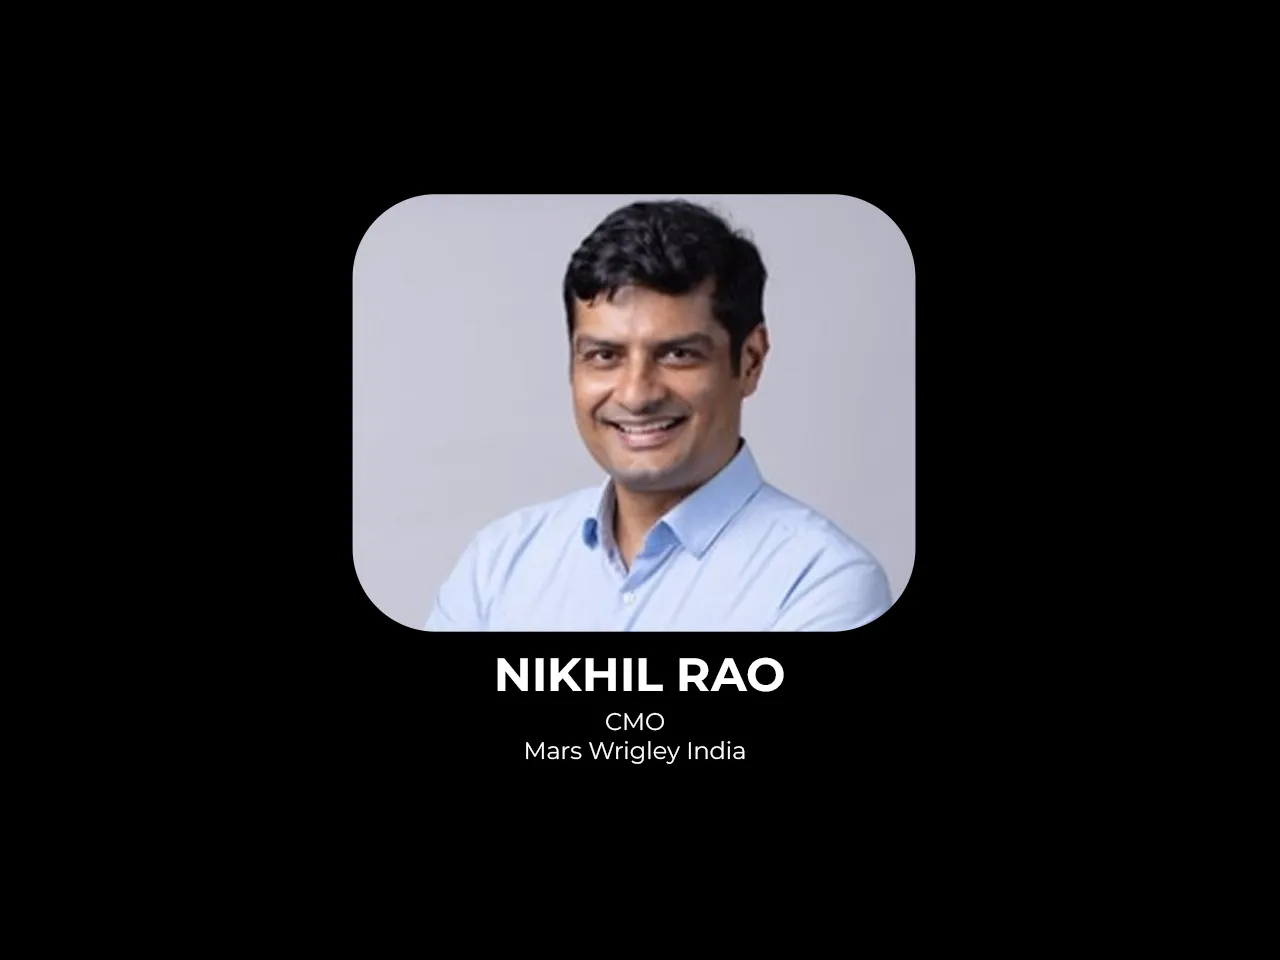 Mars Wrigley India appoints Nikhil Rao as CMO